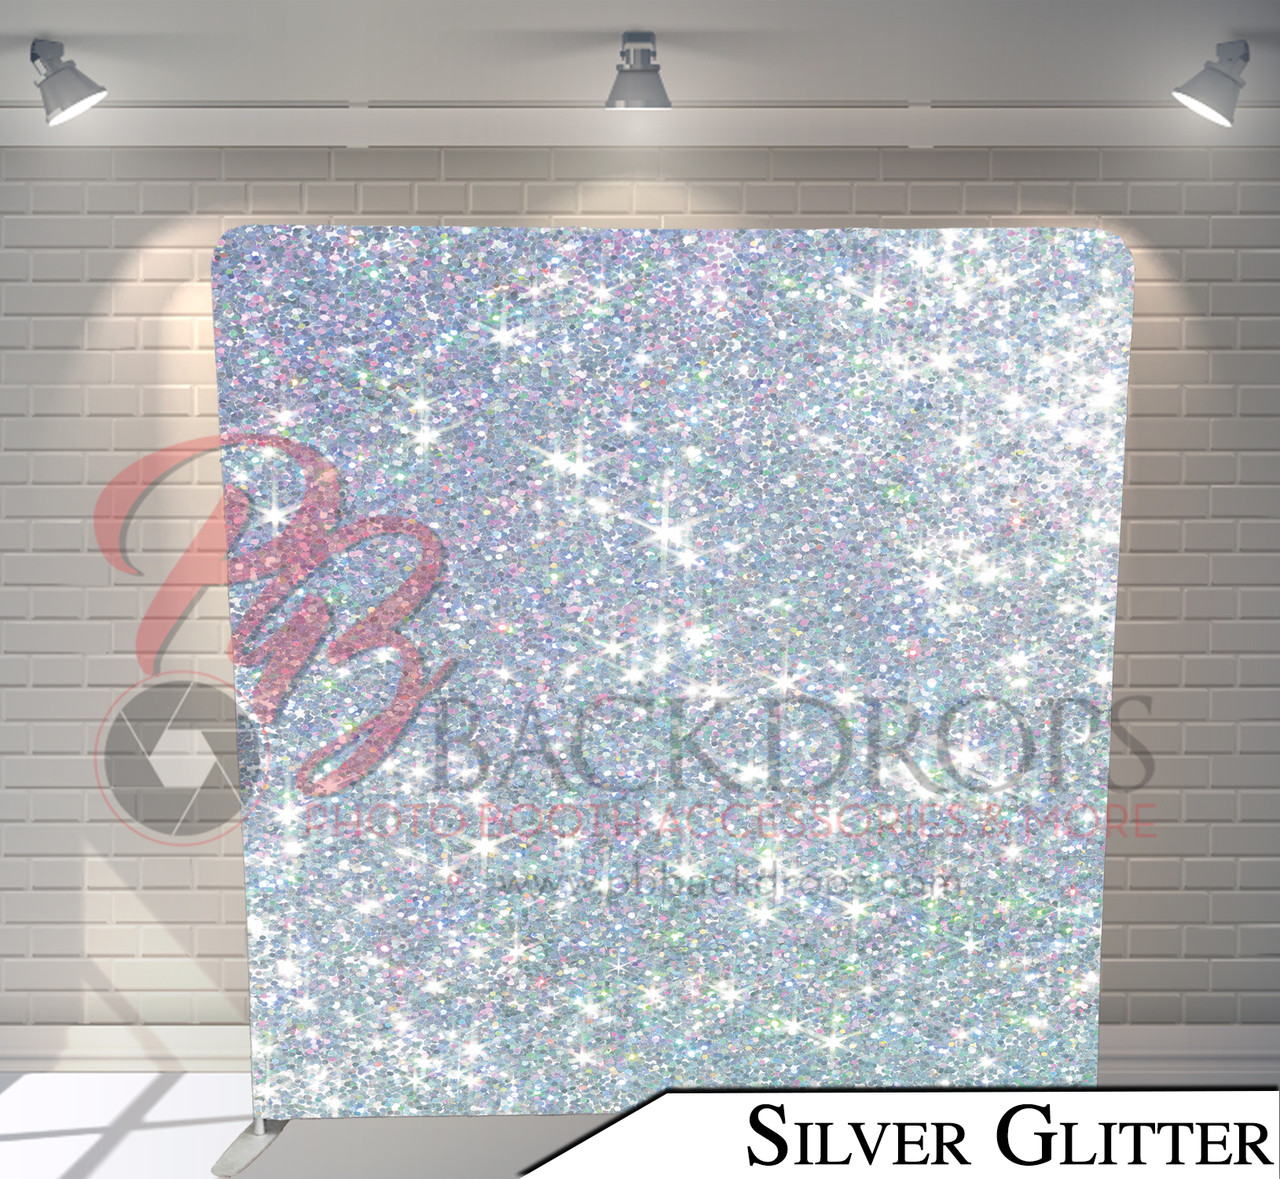 Single Sided Pillow Cover Backdrop Silver Glitter Pb Backdrops